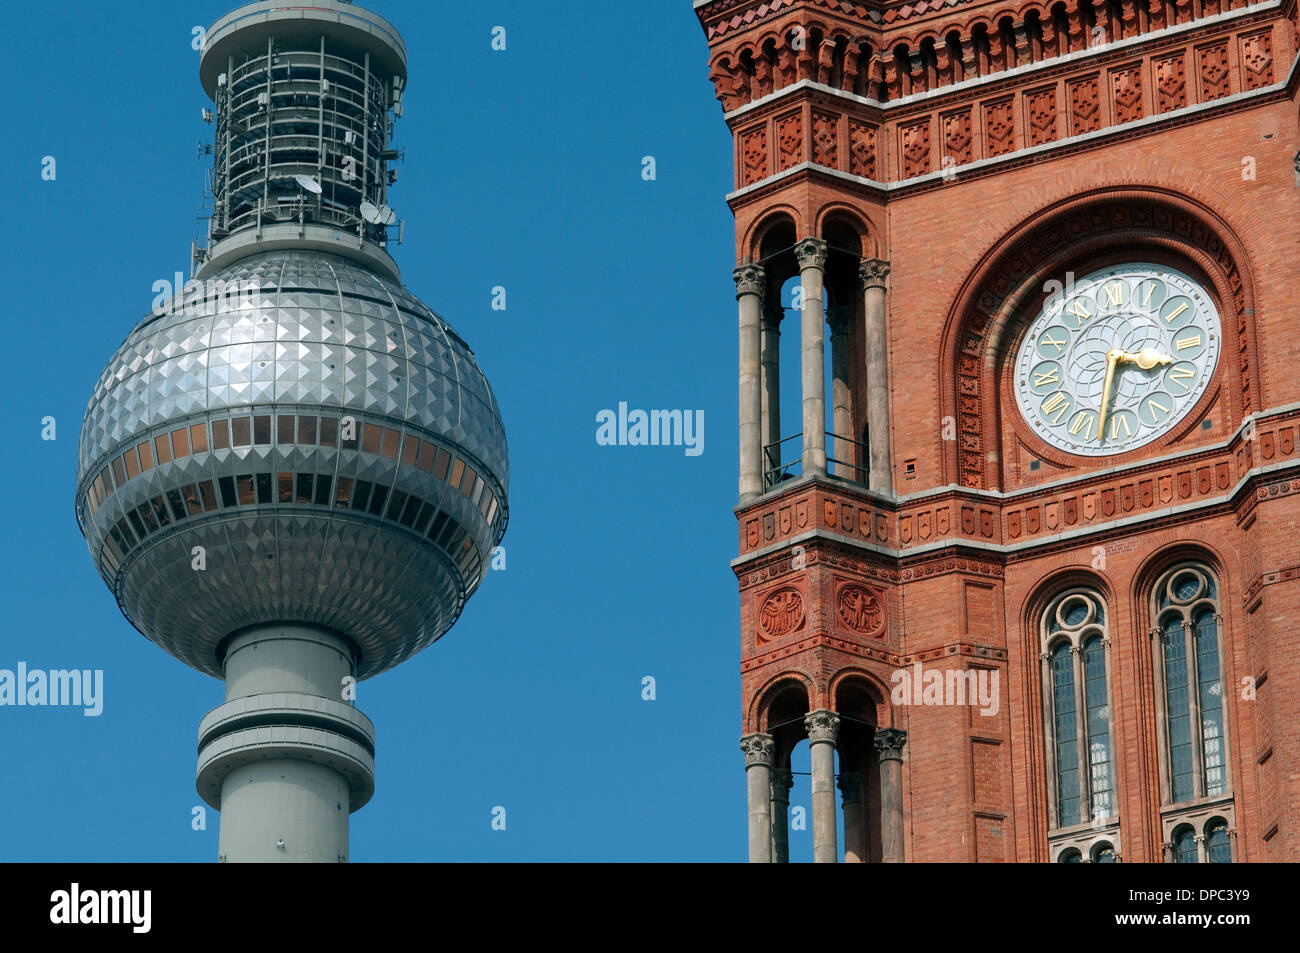 Germany, Berlin, Fernsehturm, TV Tower Stock Photo